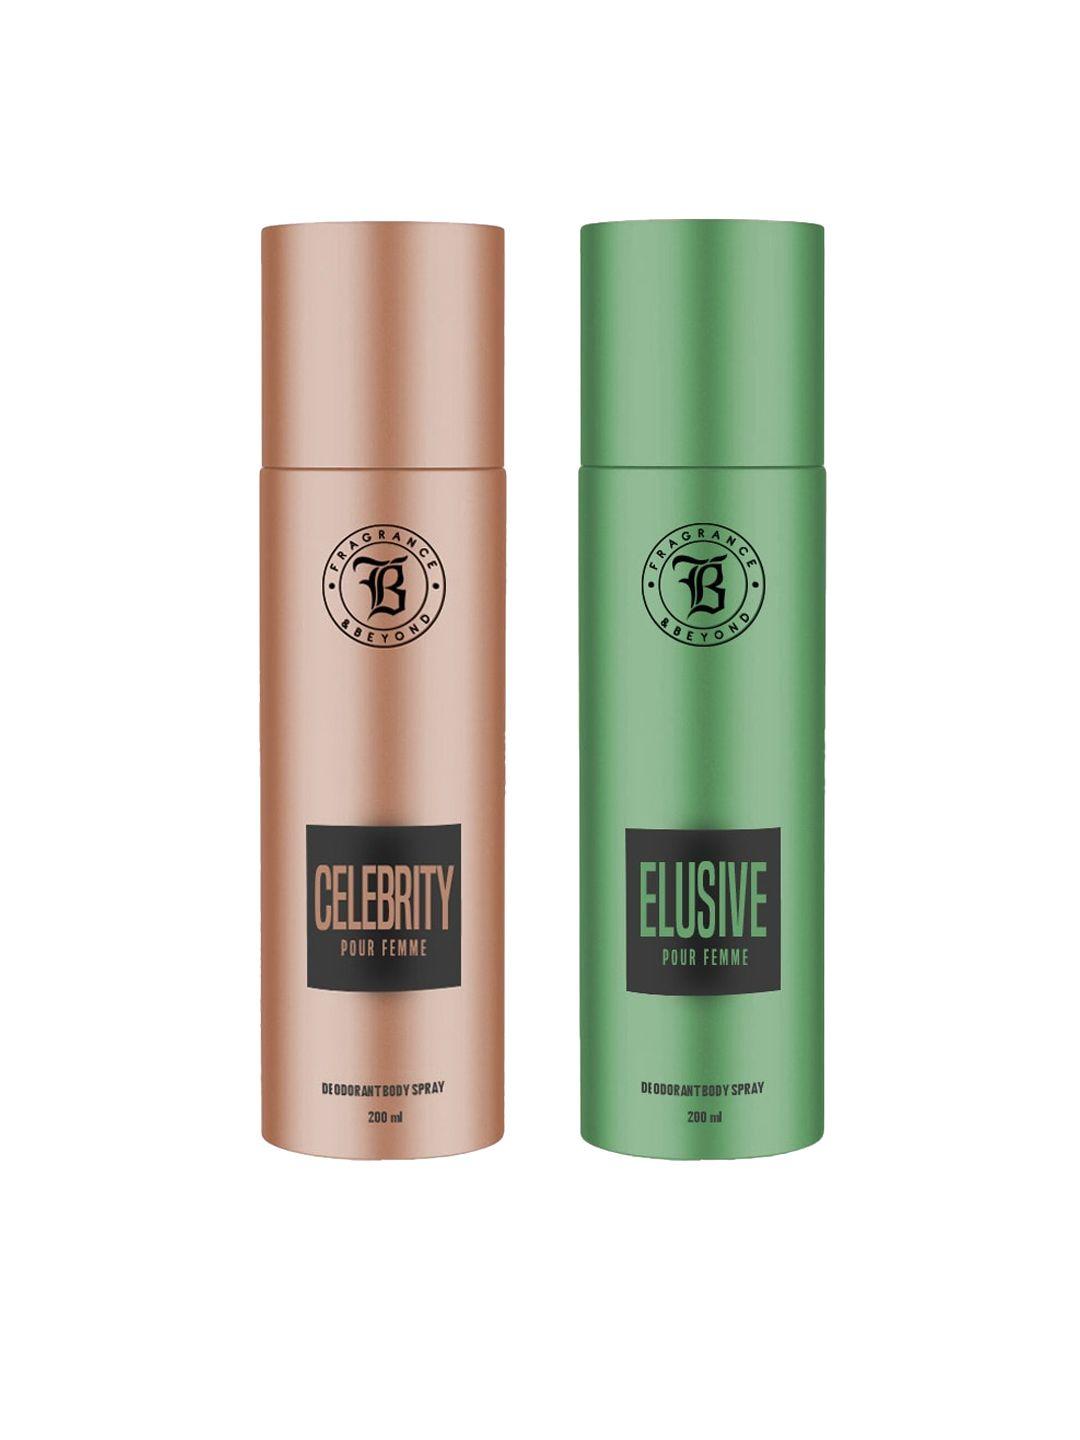 fragrance & beyond women set of celebrity & elusive deodorant body sprays - 200 ml each